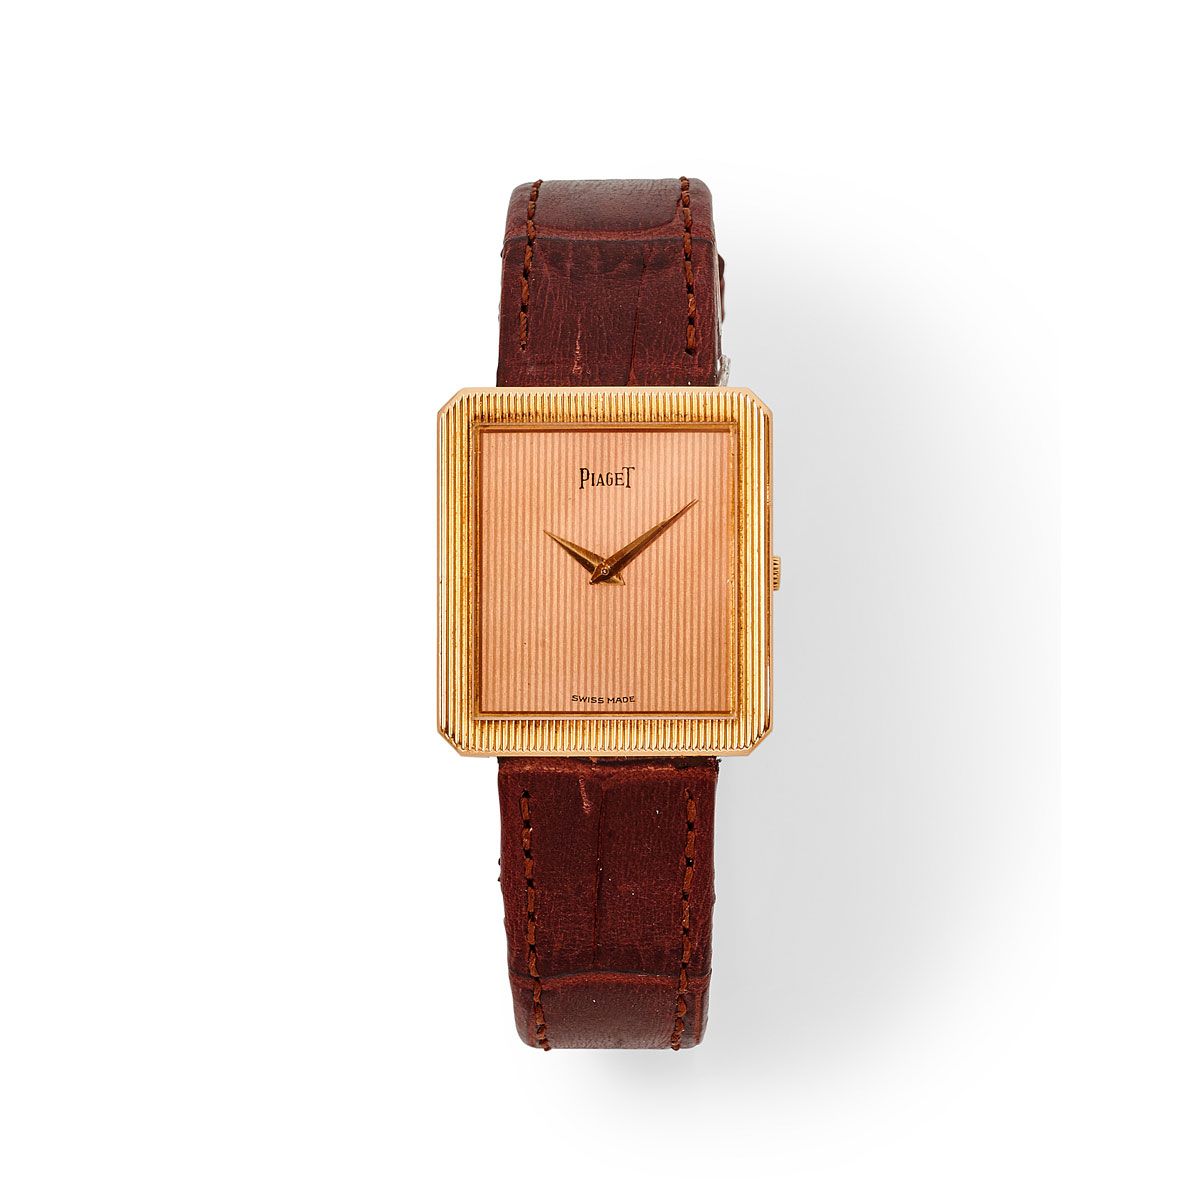 Null Piaget, Ref. 9154, Nº 122757, alrededor de 1975.

Un fino reloj rectangular&hellip;